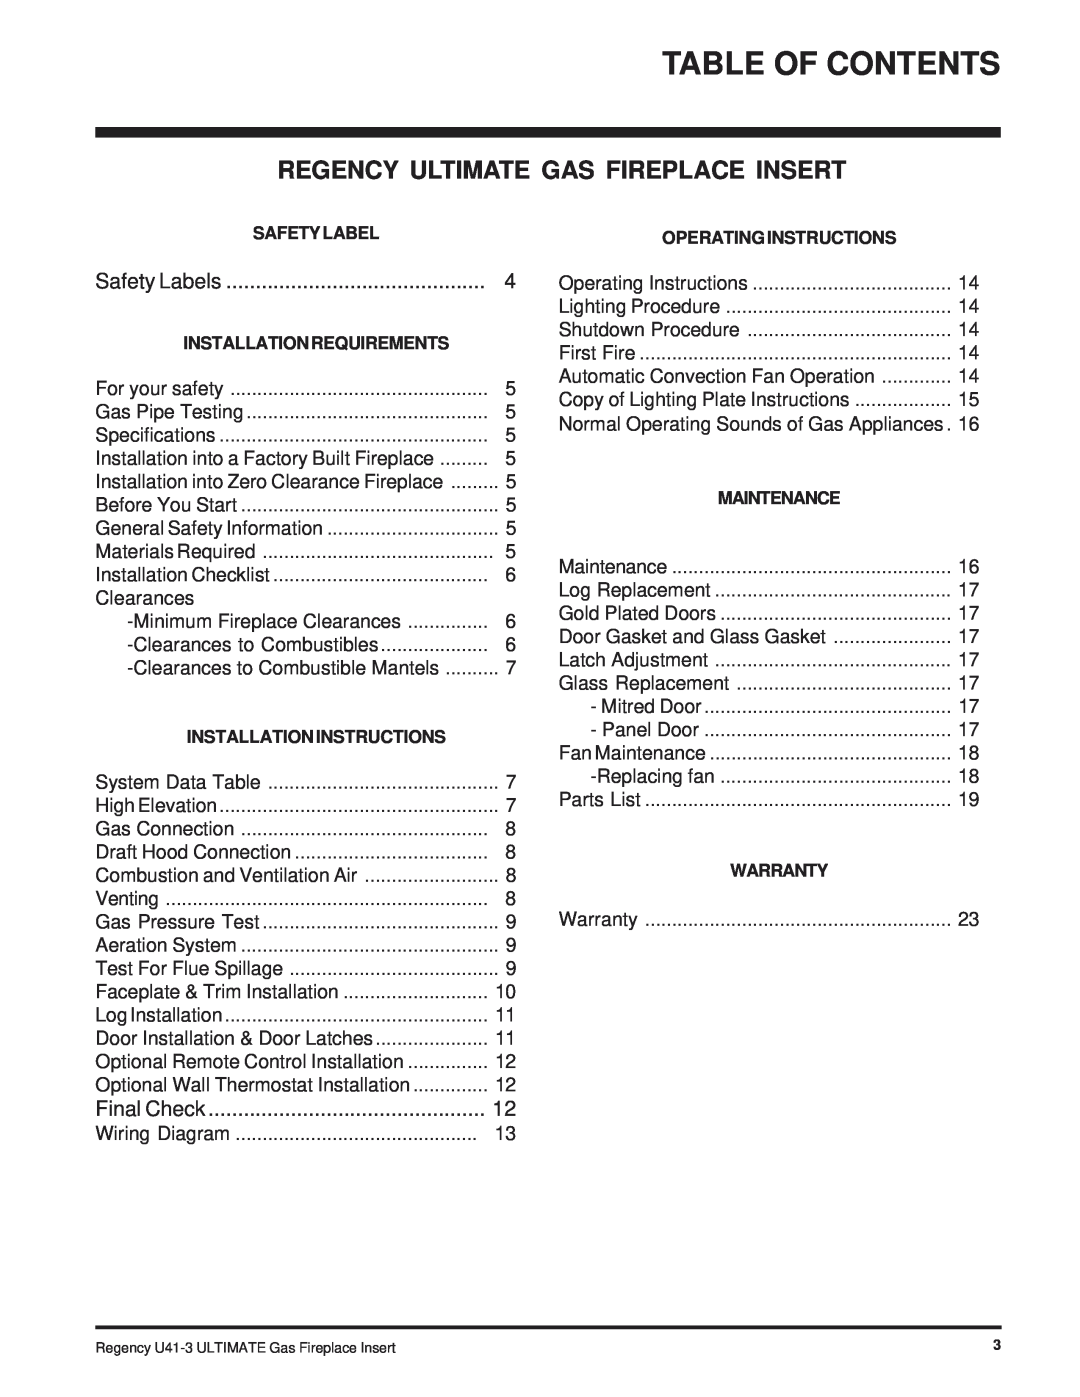 Regency U41-LP3, U41-NG3 Table Of Contents, Regency Ultimate Gas Fireplace Insert, Safety Labels, Final Check 